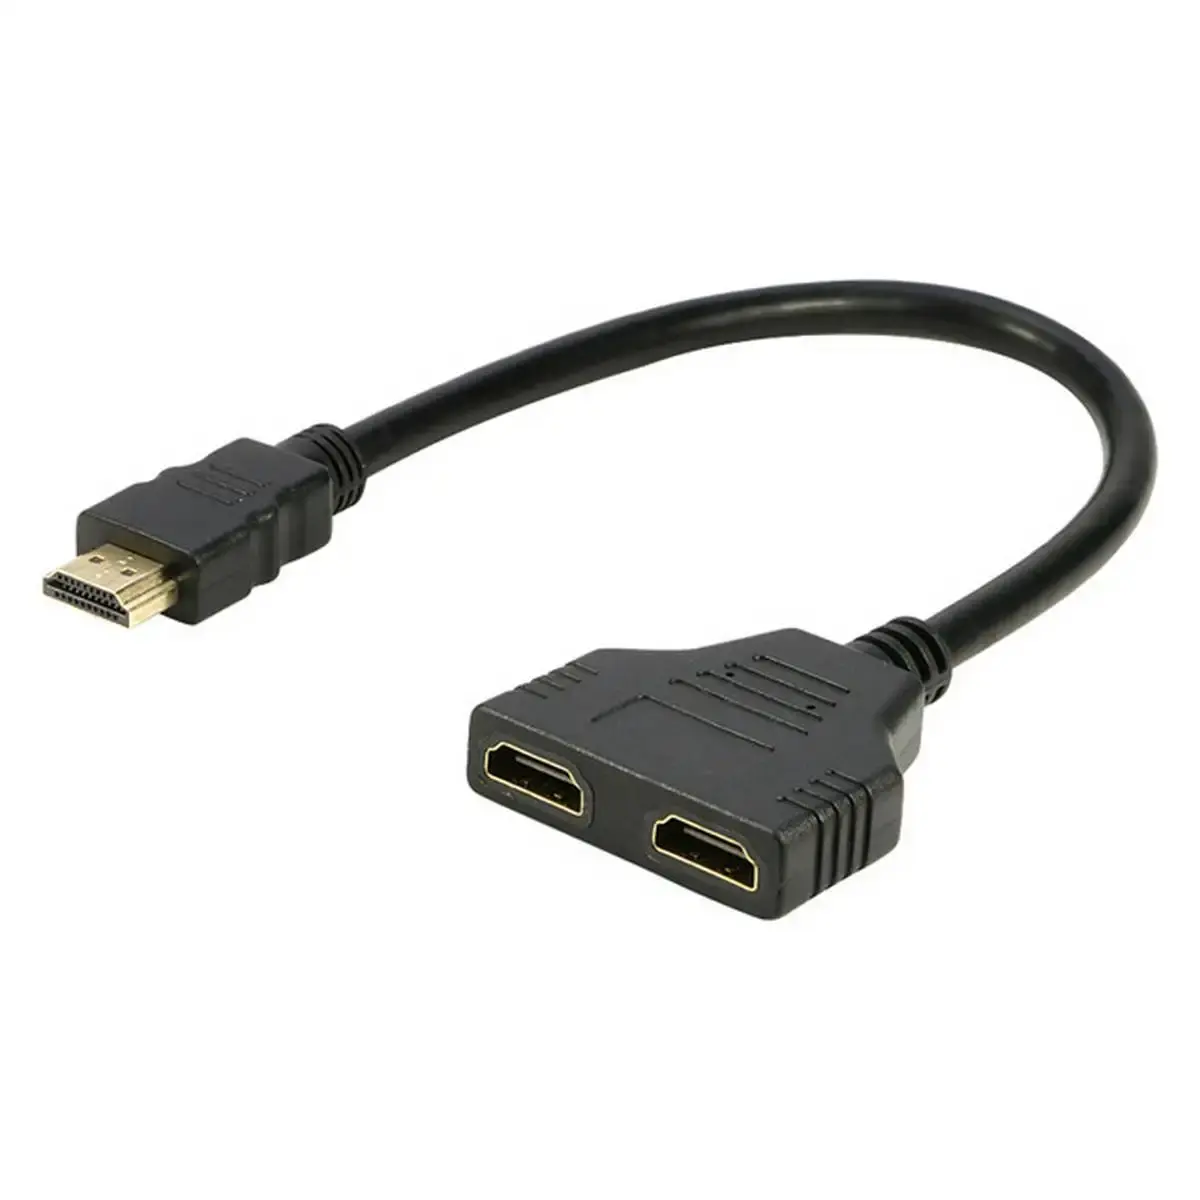 HDMIアダプター1 in 2 OutHDMIスイッチャーHDTVアダプターオス-メス変換ケーブル25CMHDTVスプリッターケーブル